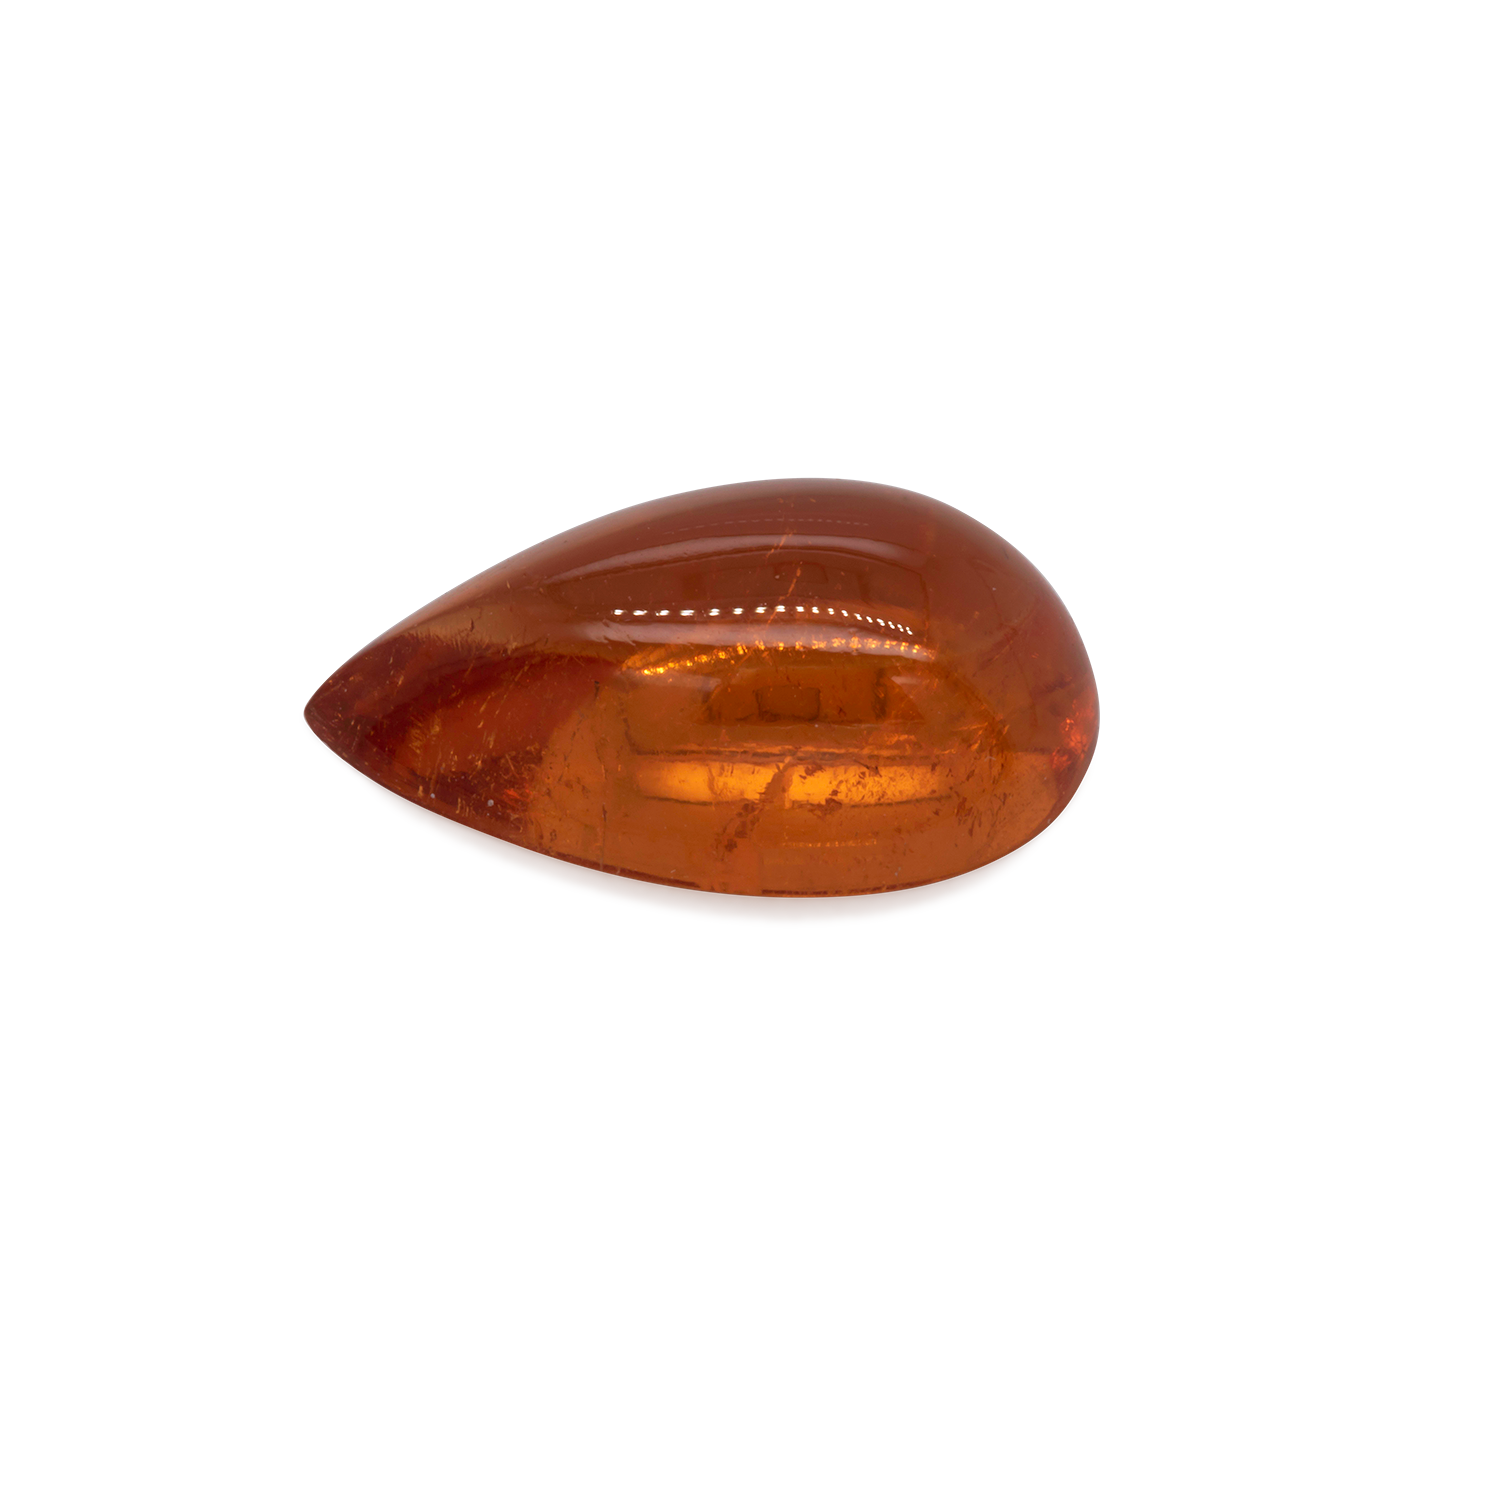 Mandarin Garnet - orange, pearshape, 12.2x7.5 mm, 4.06 cts, No. MG99041